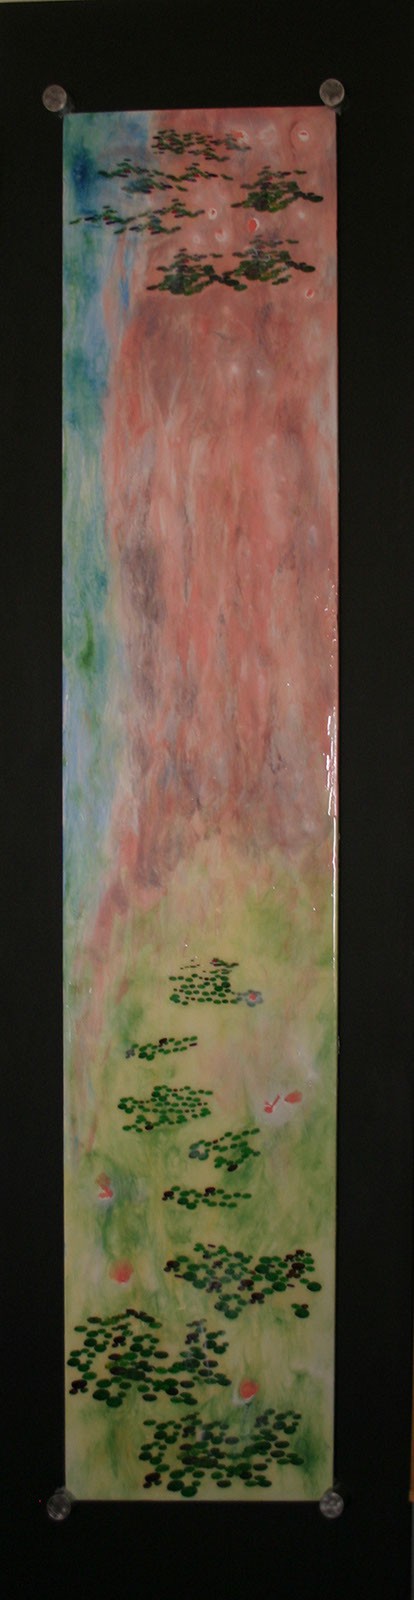 Water Lilies #9, 2008 16" x 80" - Liquid Plastic, Porcelainizer, Acetate Prints and Oil Paint Mixture on Glass. Back-Lit Glass Painting. SOLD